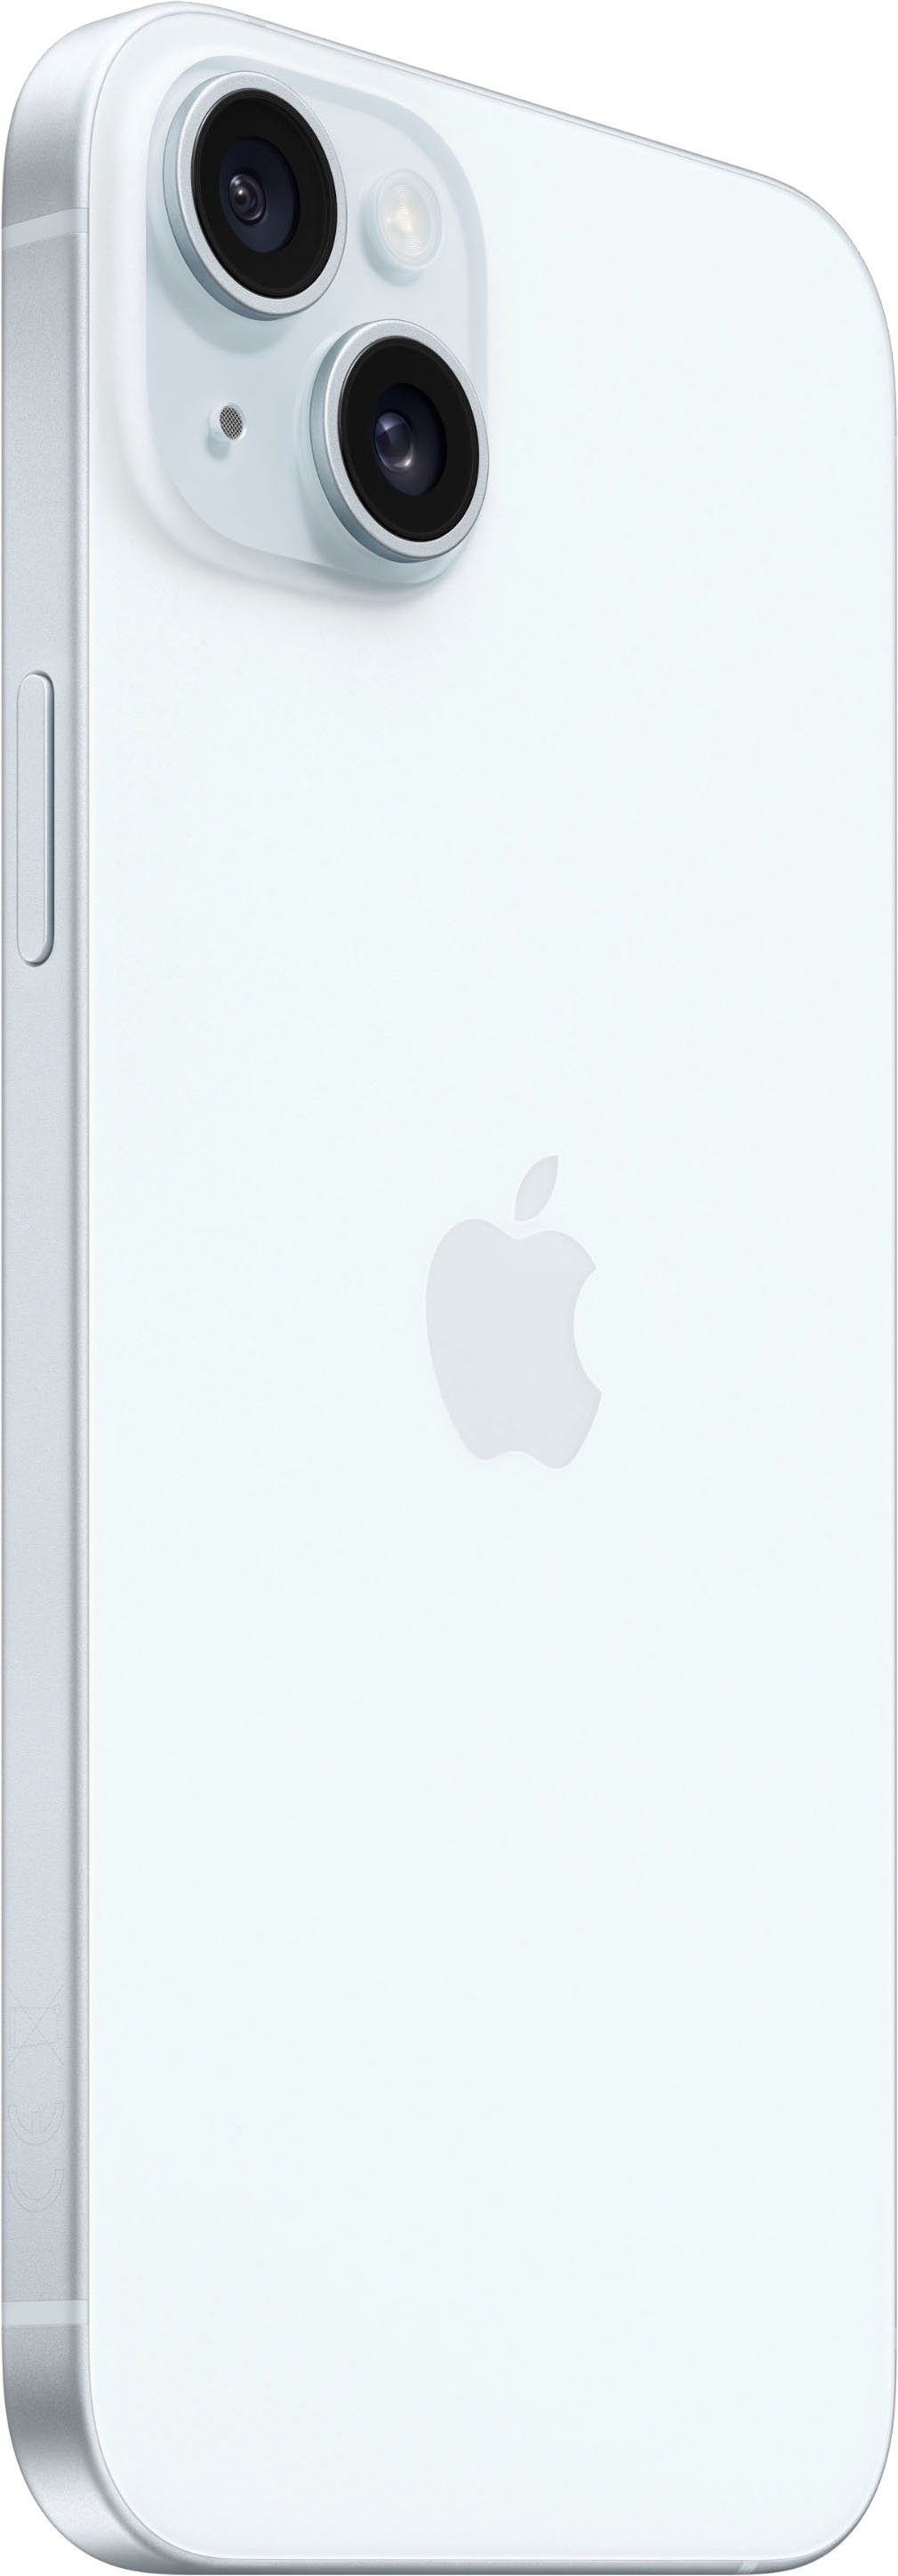 15 cm/6,7 Apple iPhone 256GB Kamera) (17 Zoll, Smartphone 48 256 Plus MP GB Speicherplatz,